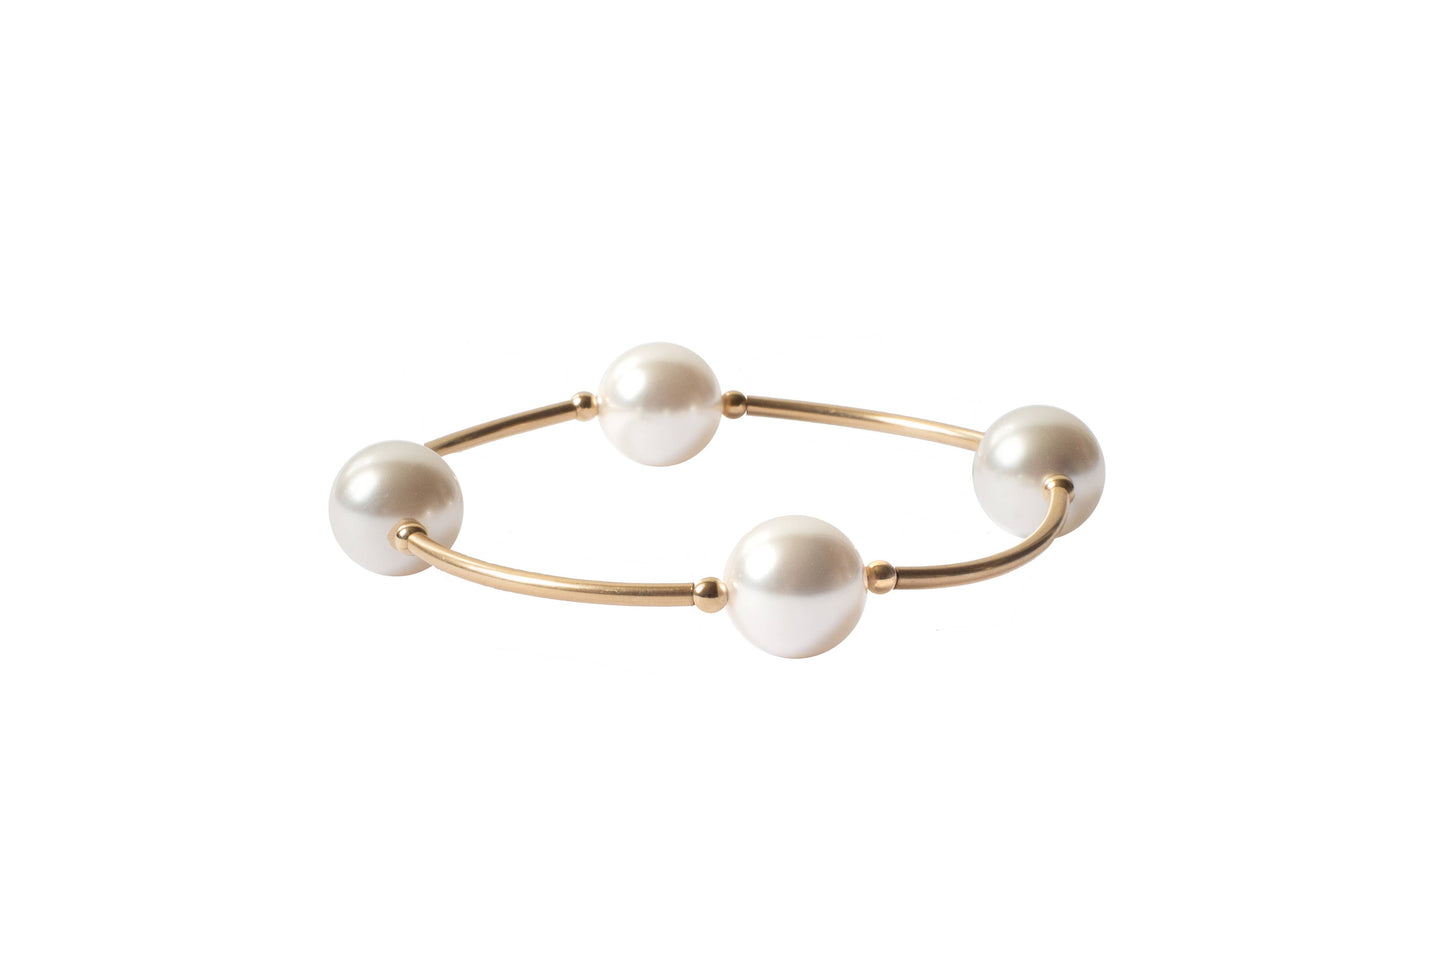 12mm White Blessing Bracelet with Gold Filled Tubes: S